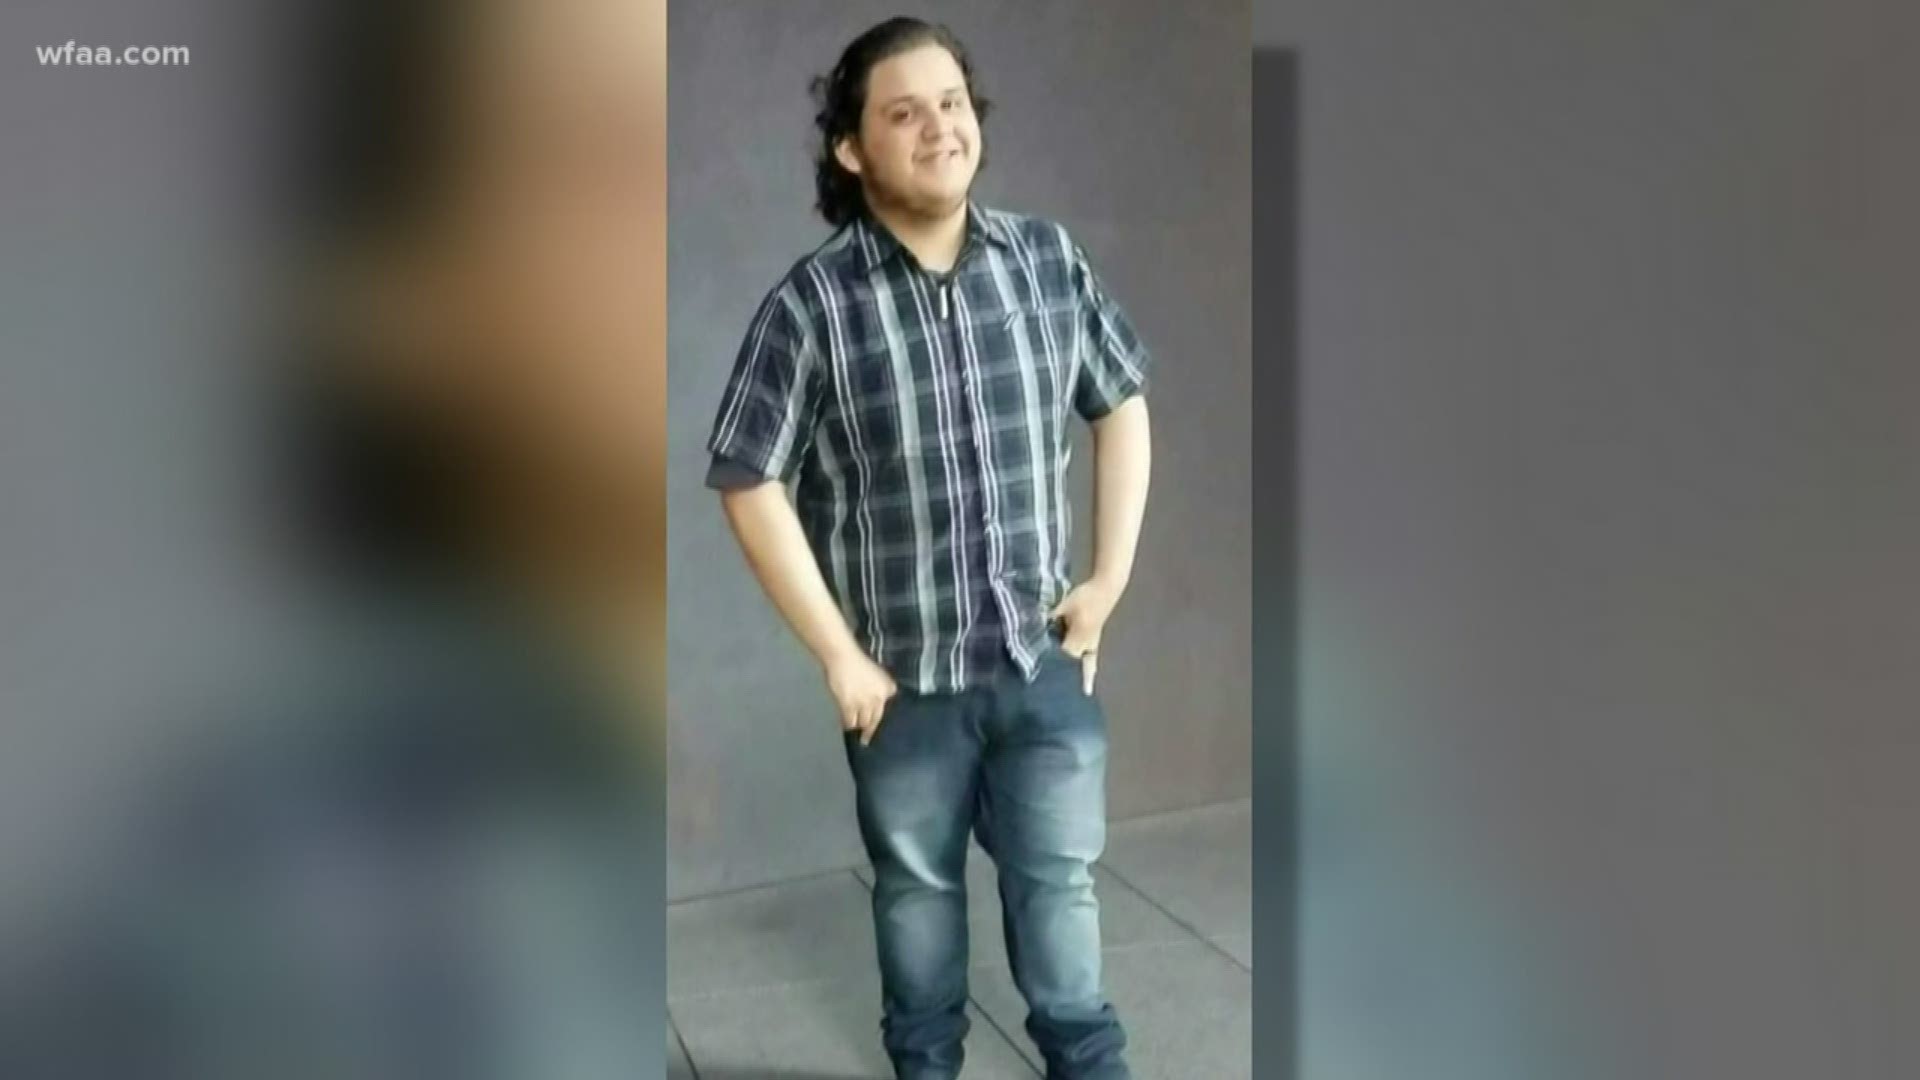 Angel Alvarado was last seen walking to his truck at the Uplift Preparatory school in Fort Worth.